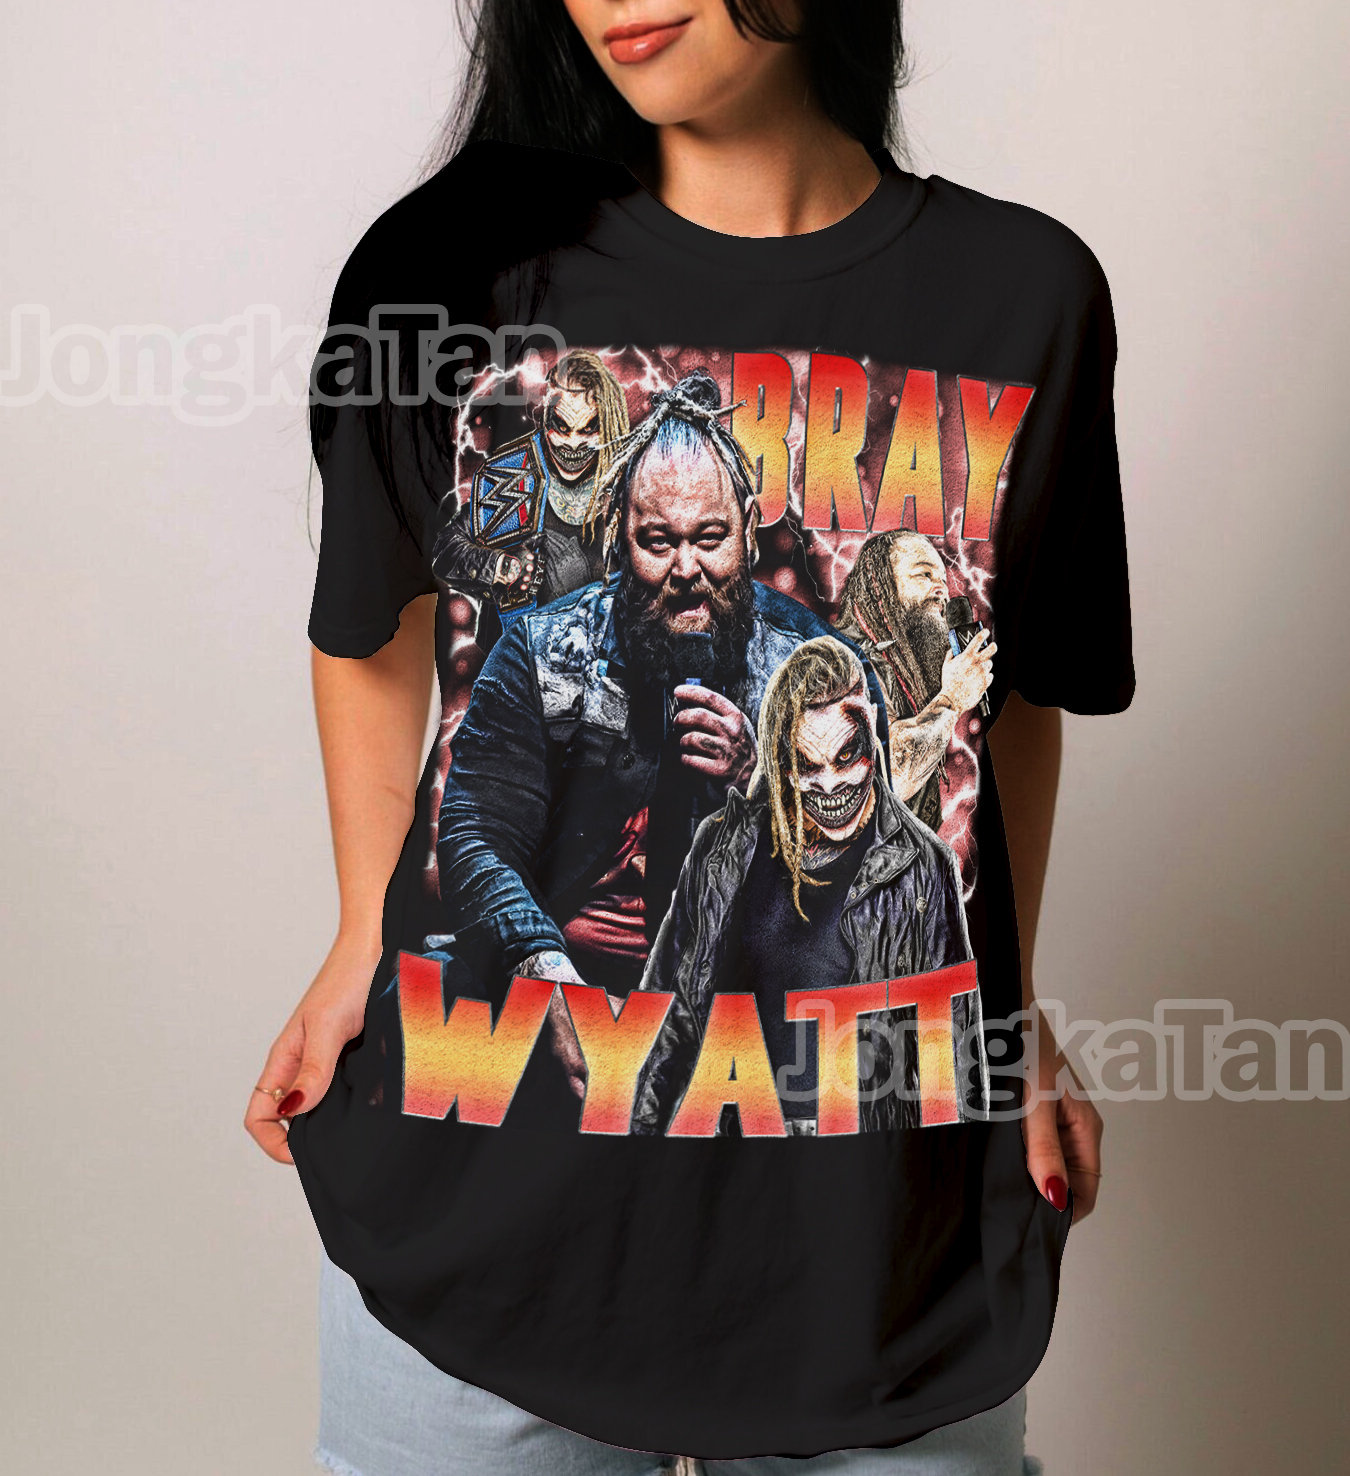 R.I.P Bray Wyatt Vintage T-shirt, the Fiend Comfort Colors Shirt, Legends  Never Die Tee Shirt, Woman and Man Unisex T-shirt, Trending Shirt. 